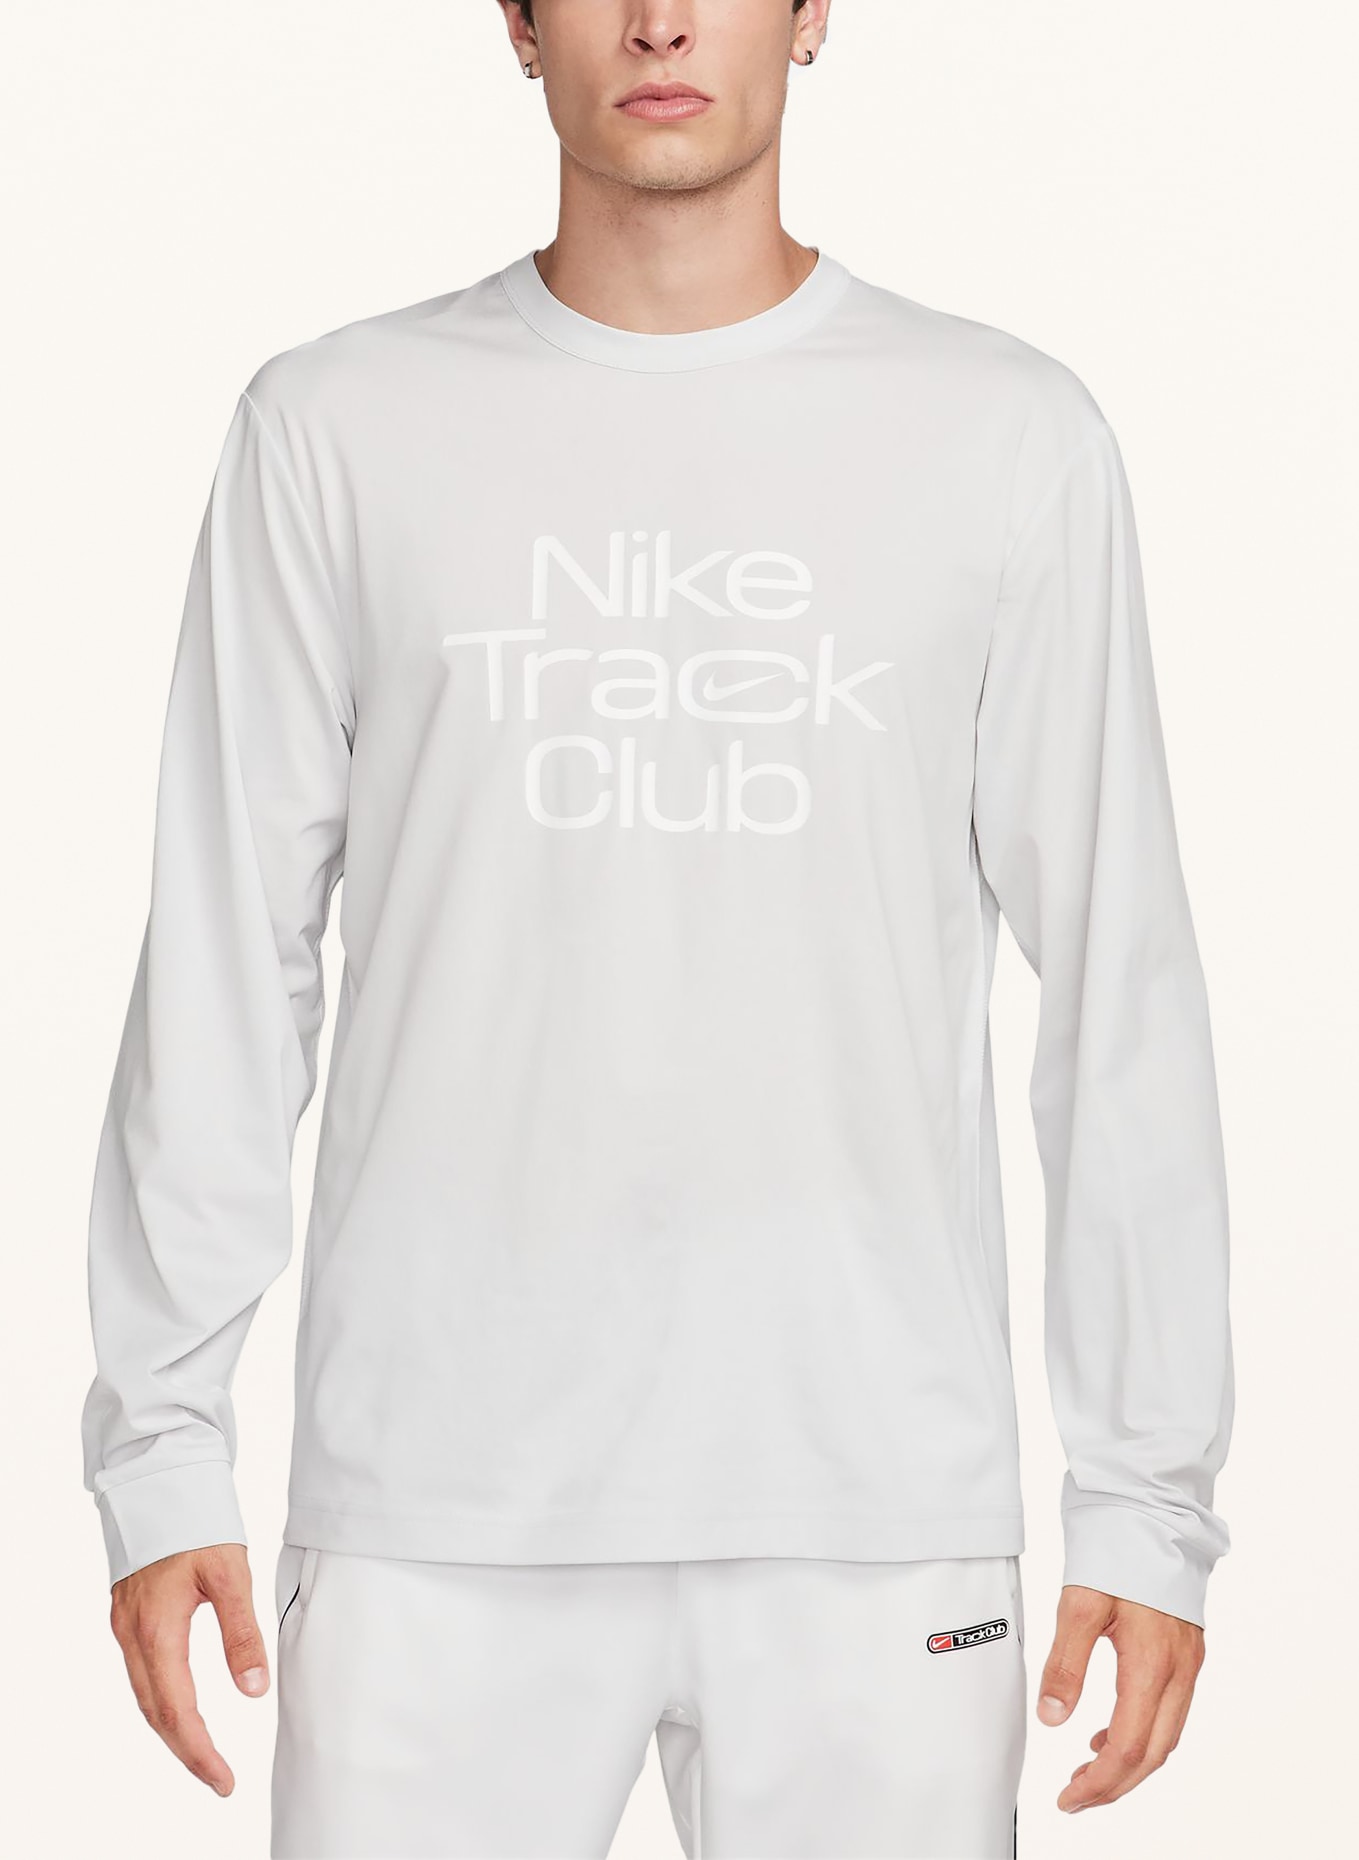 Nike Laufshirt TRACK weiss hellgrau/ CLUB in